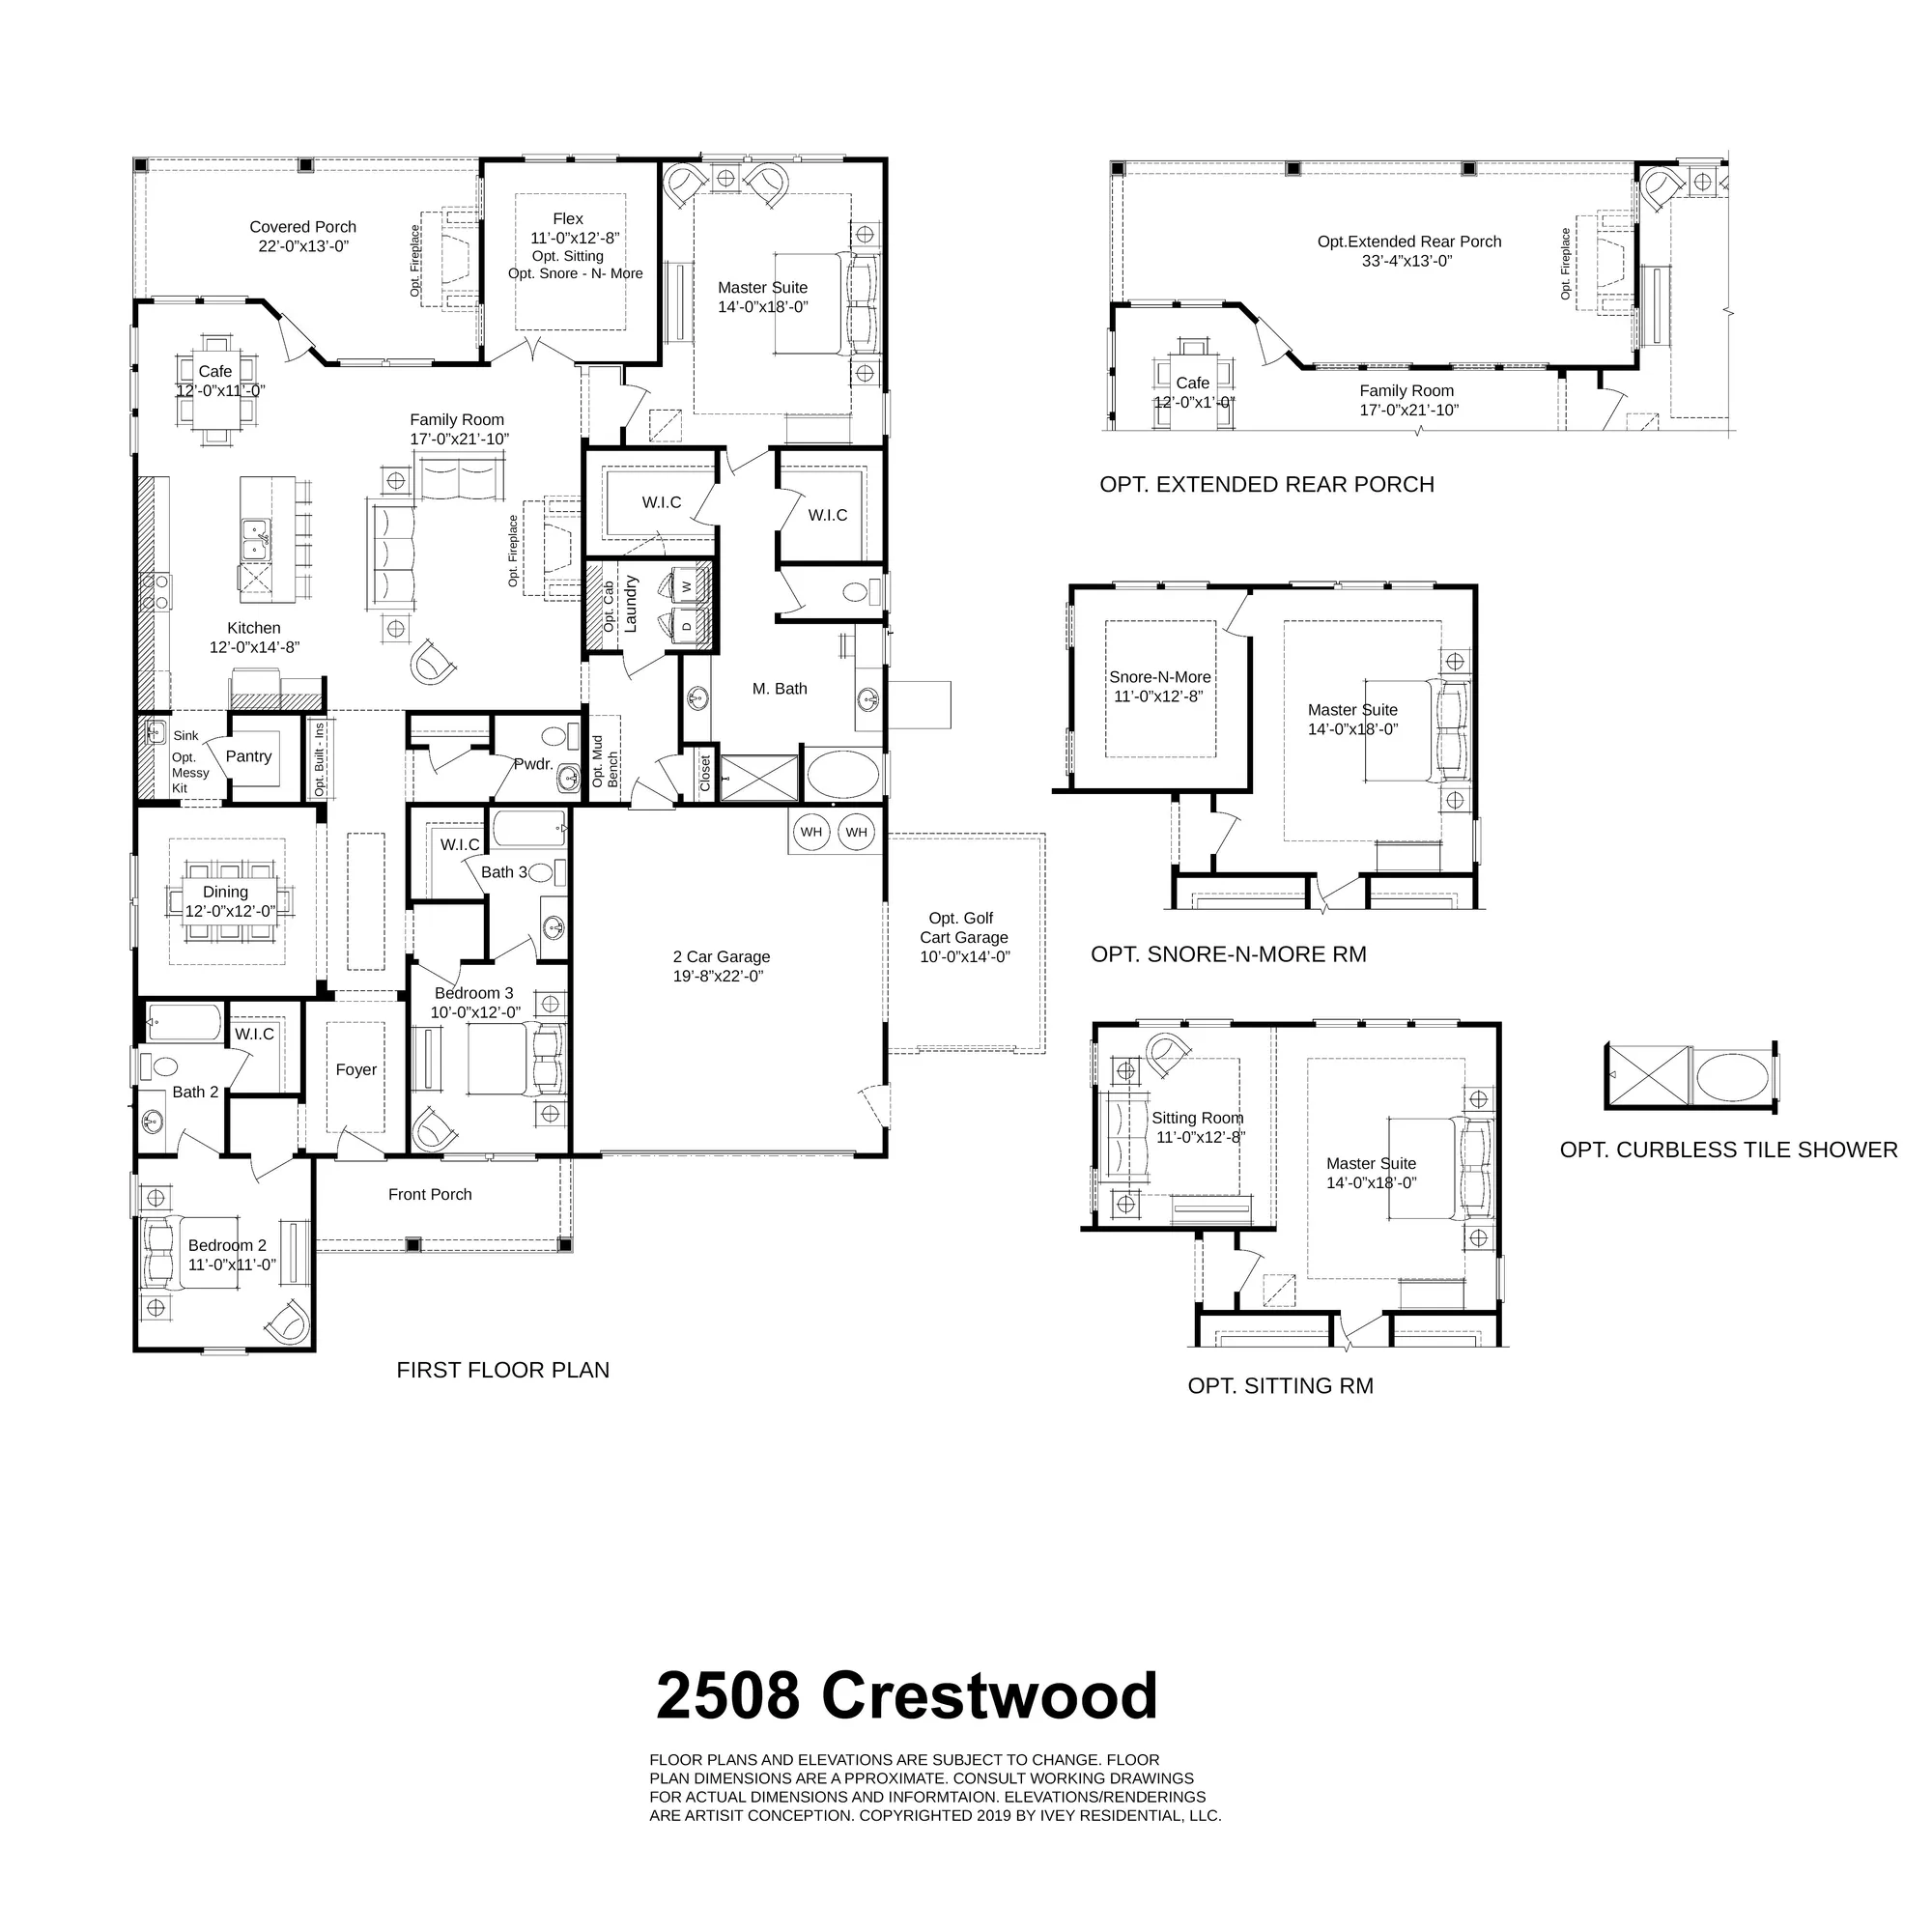 Crestwood Floor Plan Plan 6